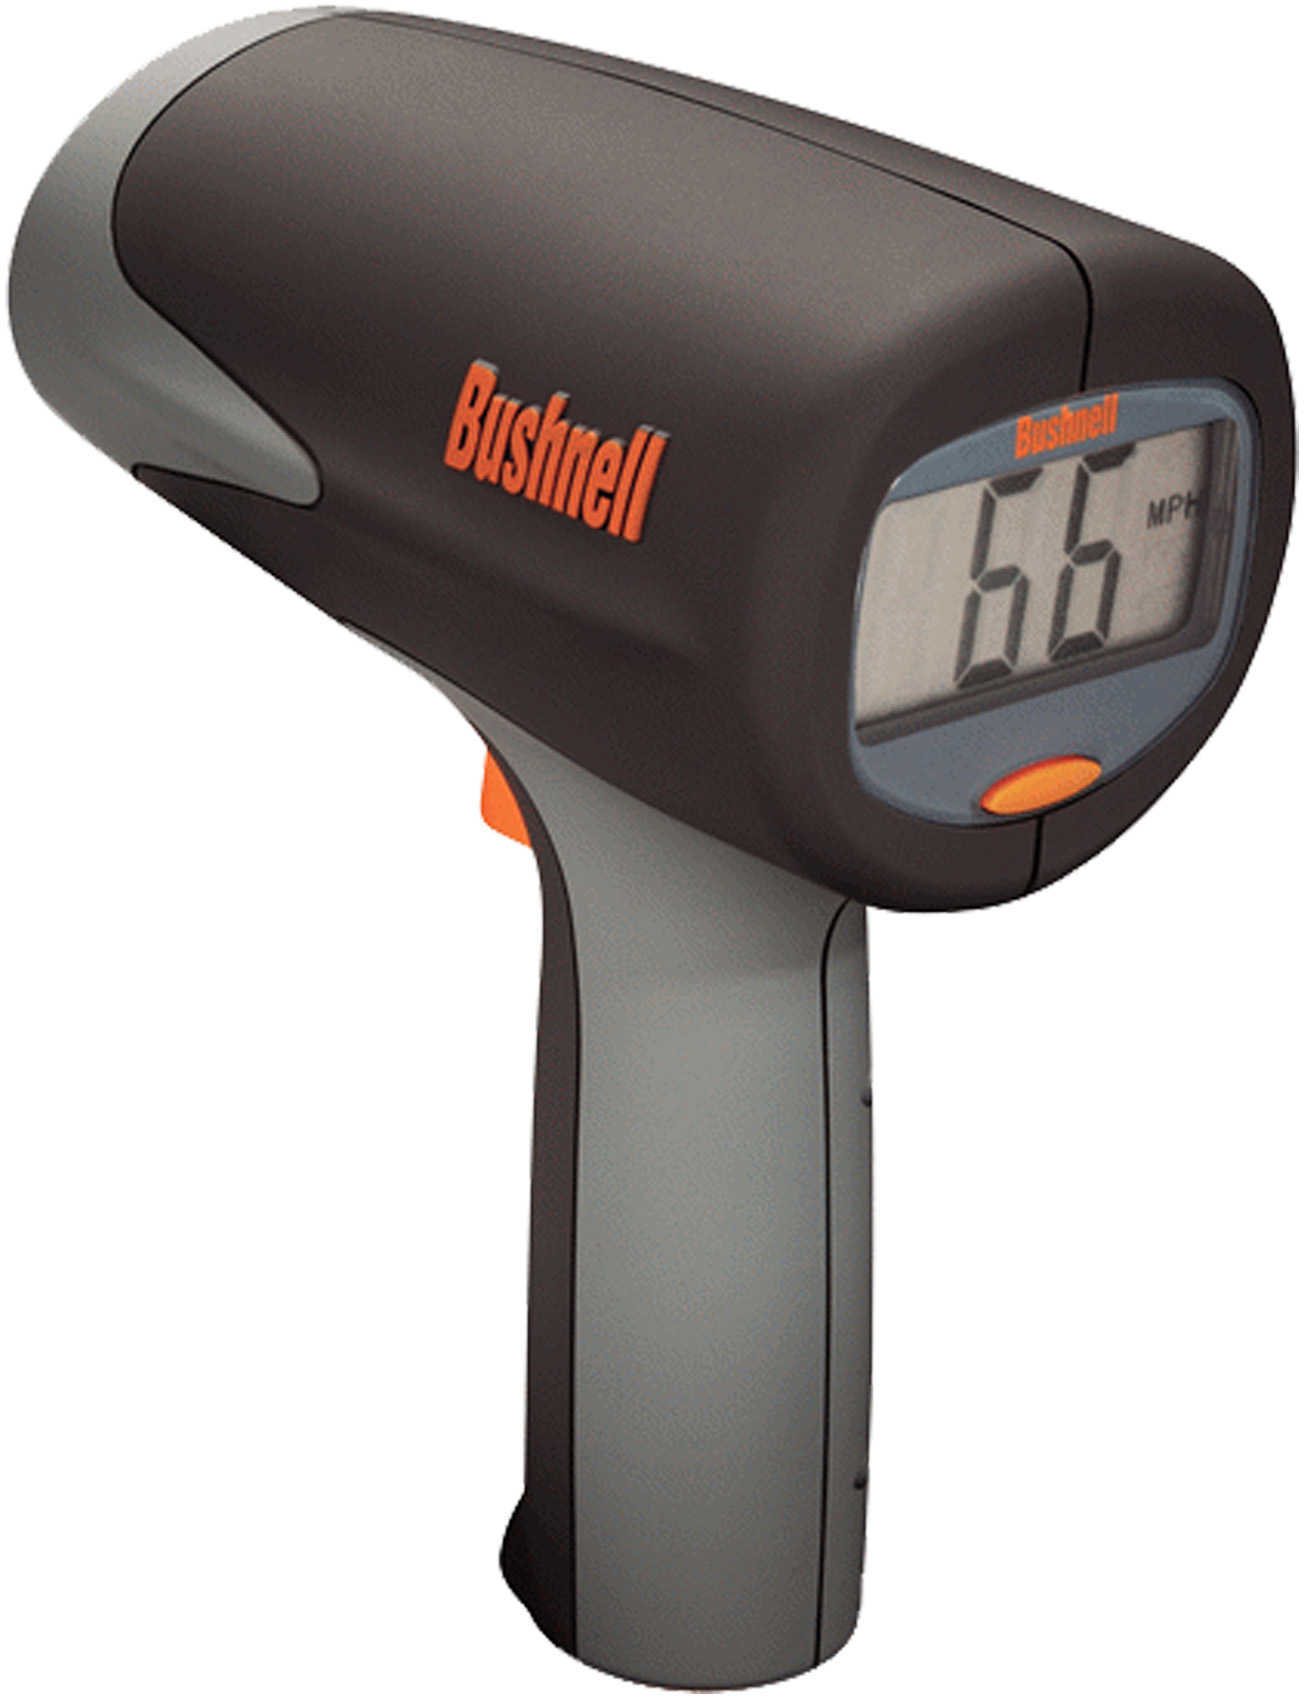 Bushnell 101911 Velocity Radar Gun LCD Display 2 C